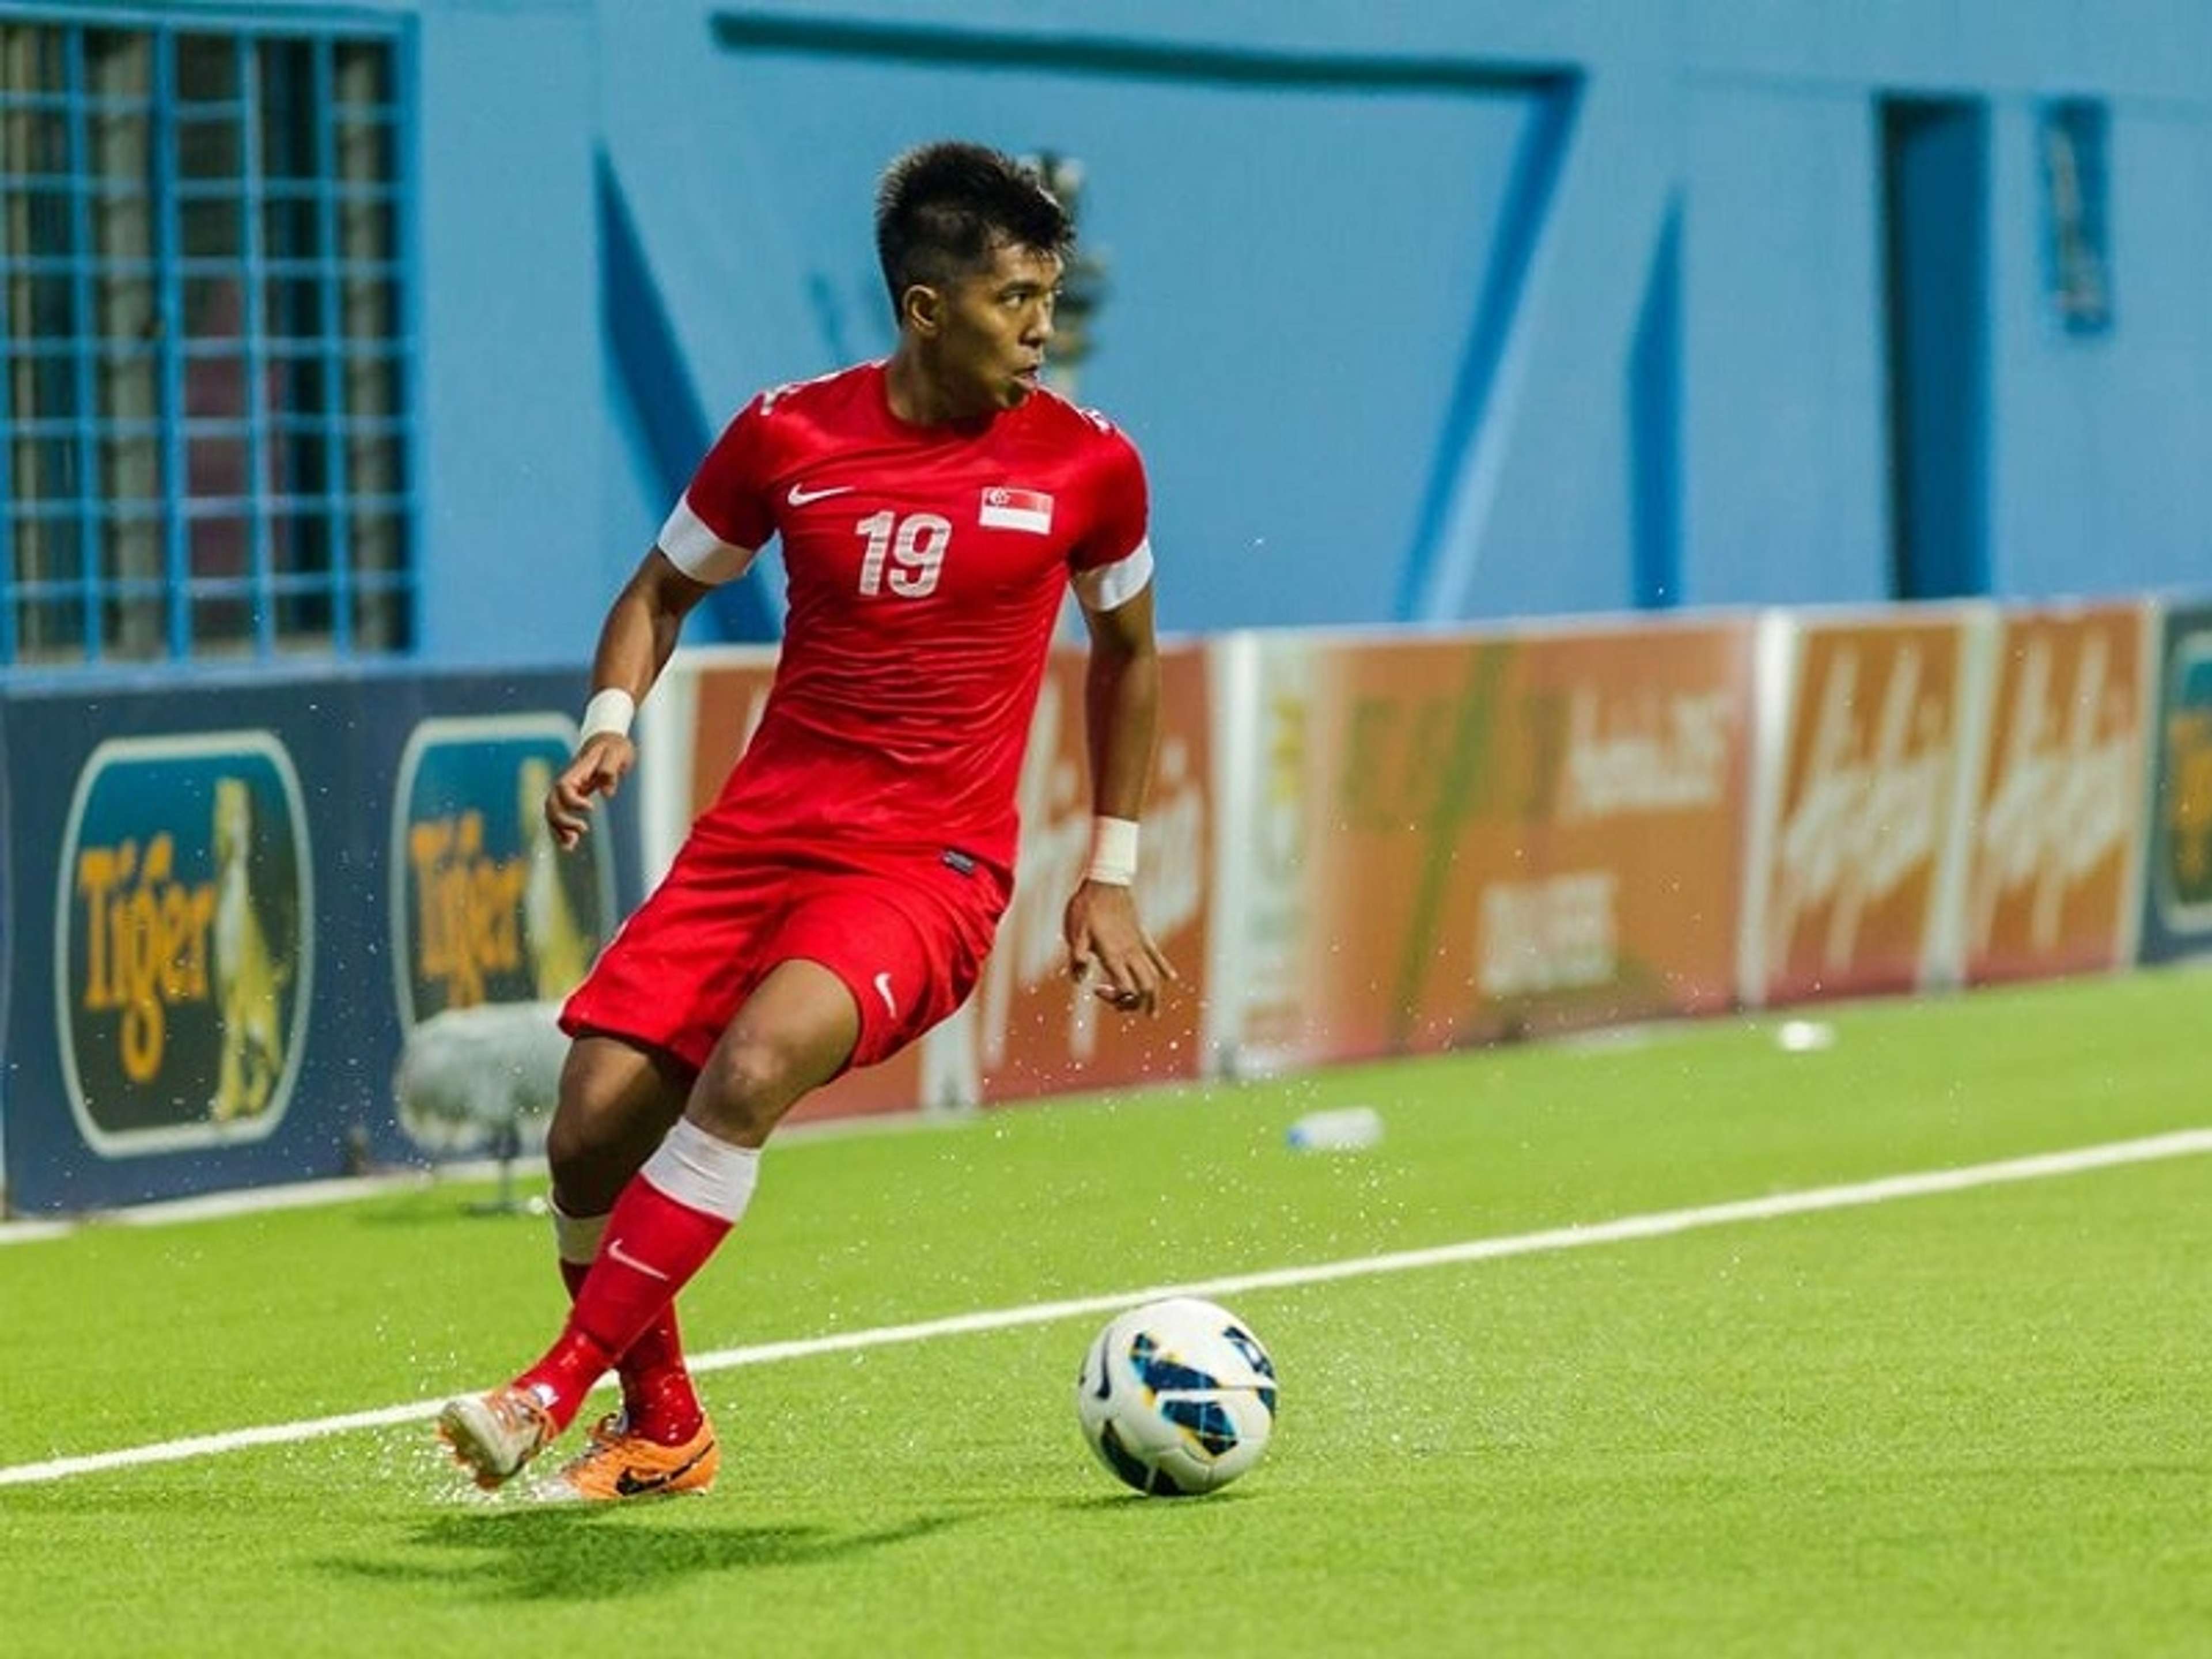 Khairul Amri Singapore Jordan 2015 AFC Asian Cup qualifiers 04022014